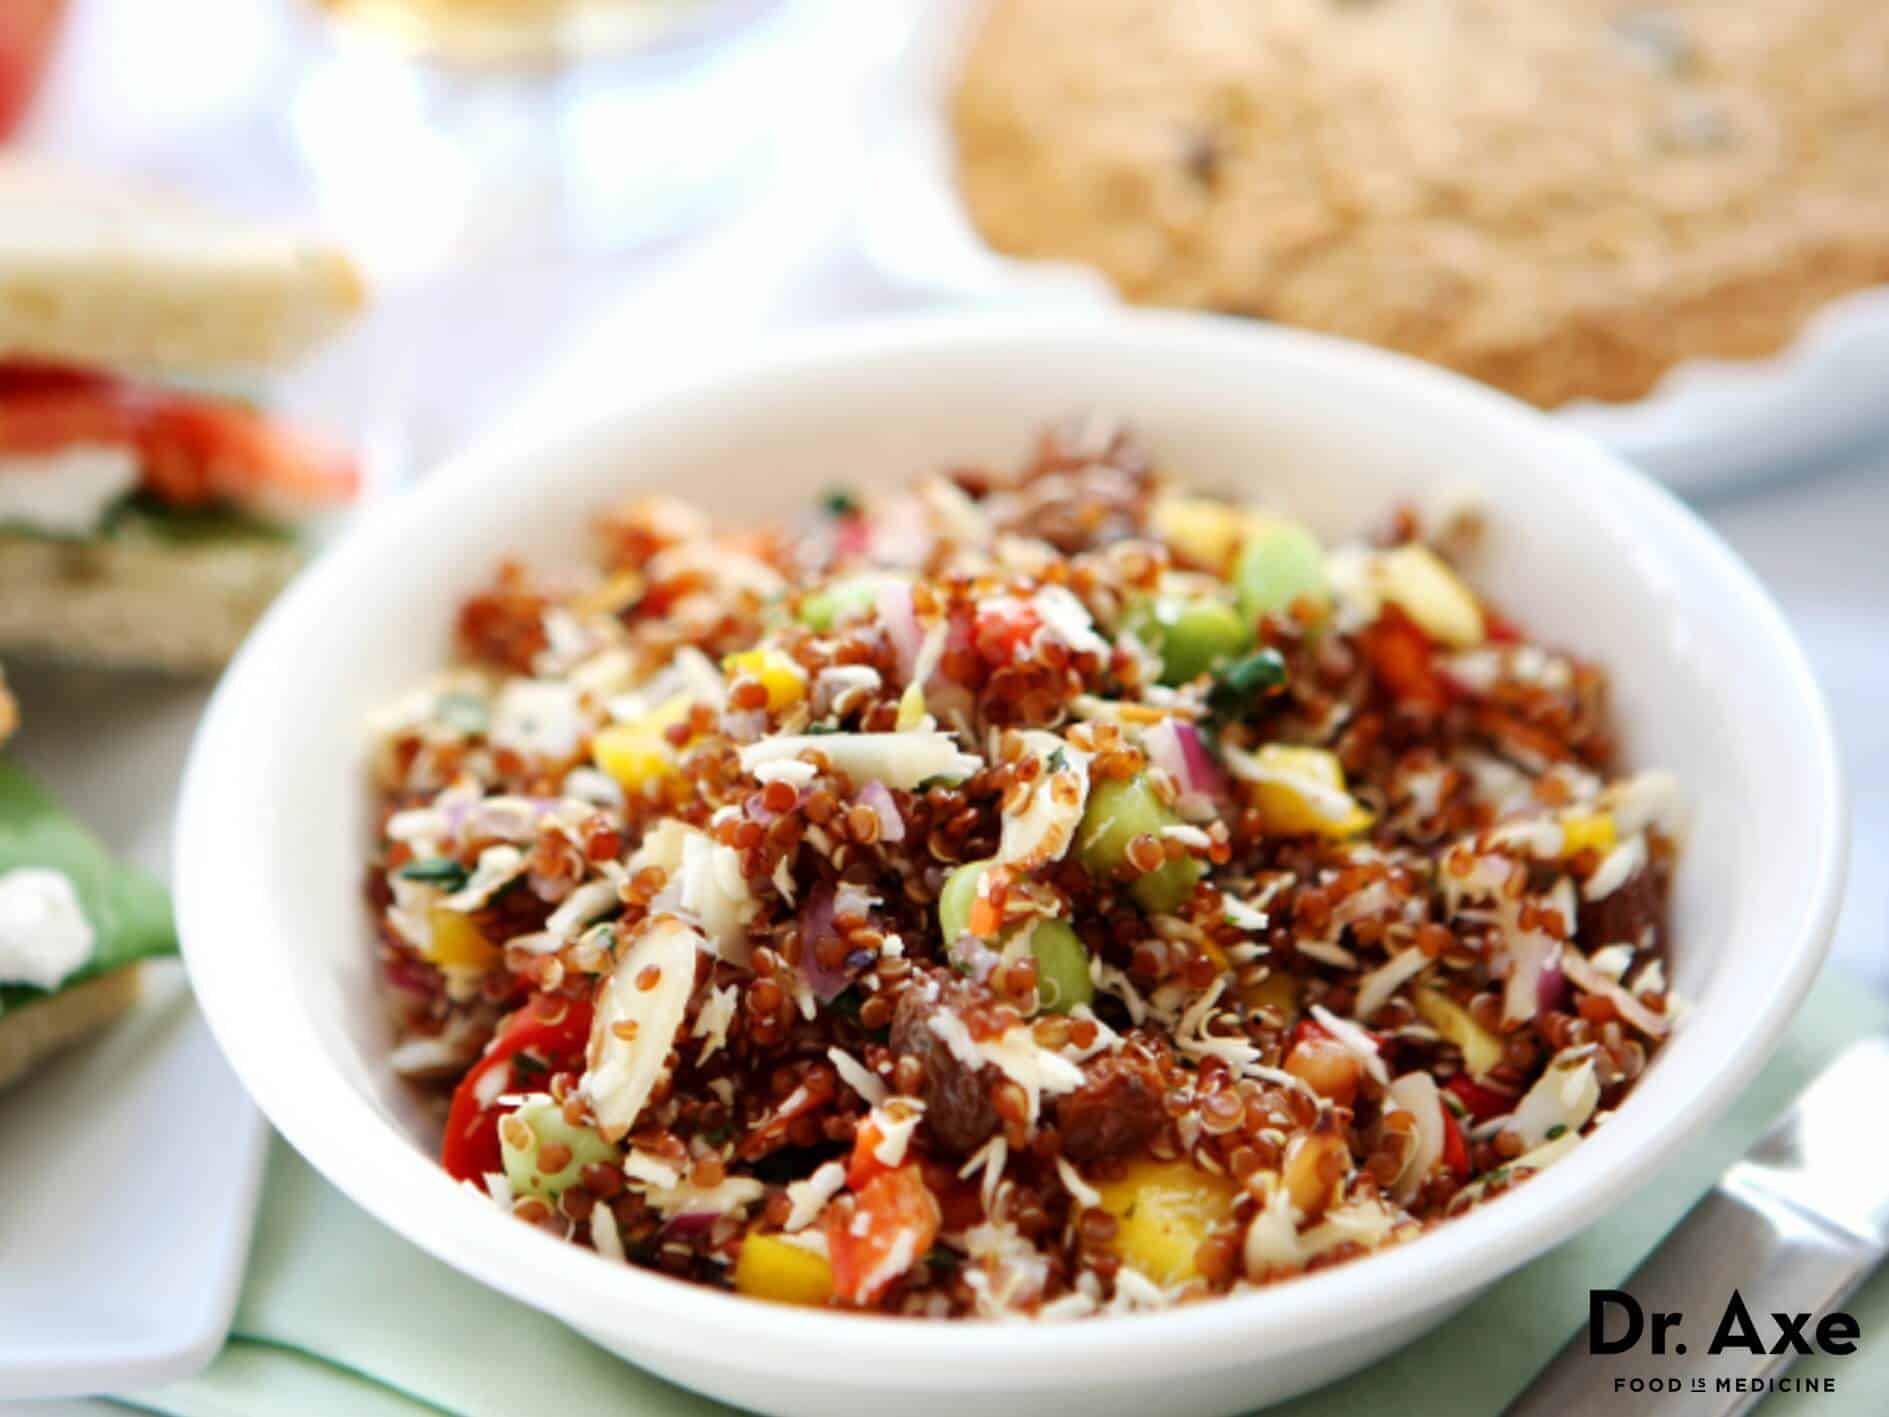 Apple quinoa and kale salad recipe - Dr. Axe